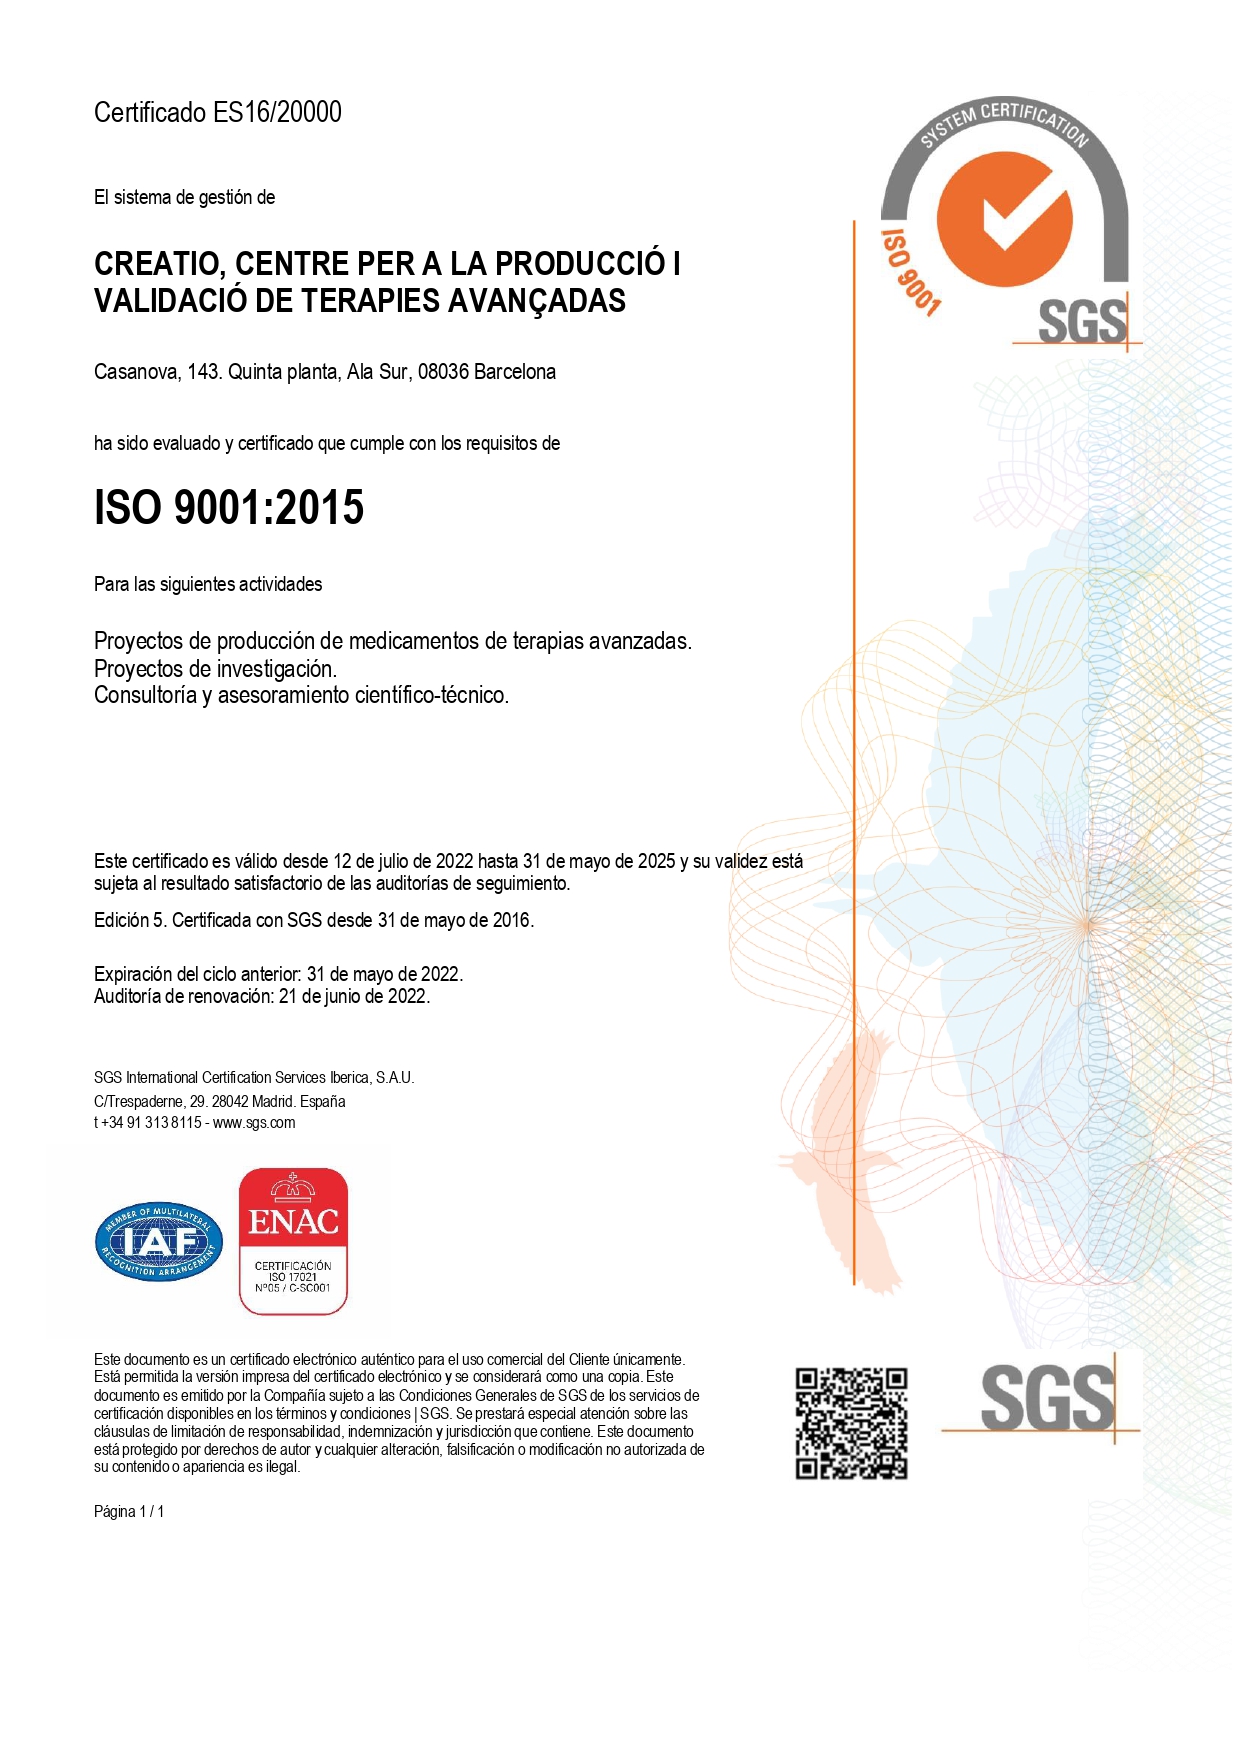 Creatio Certificado De Renovación Iso 9001 2015 Terapias Avanzadas